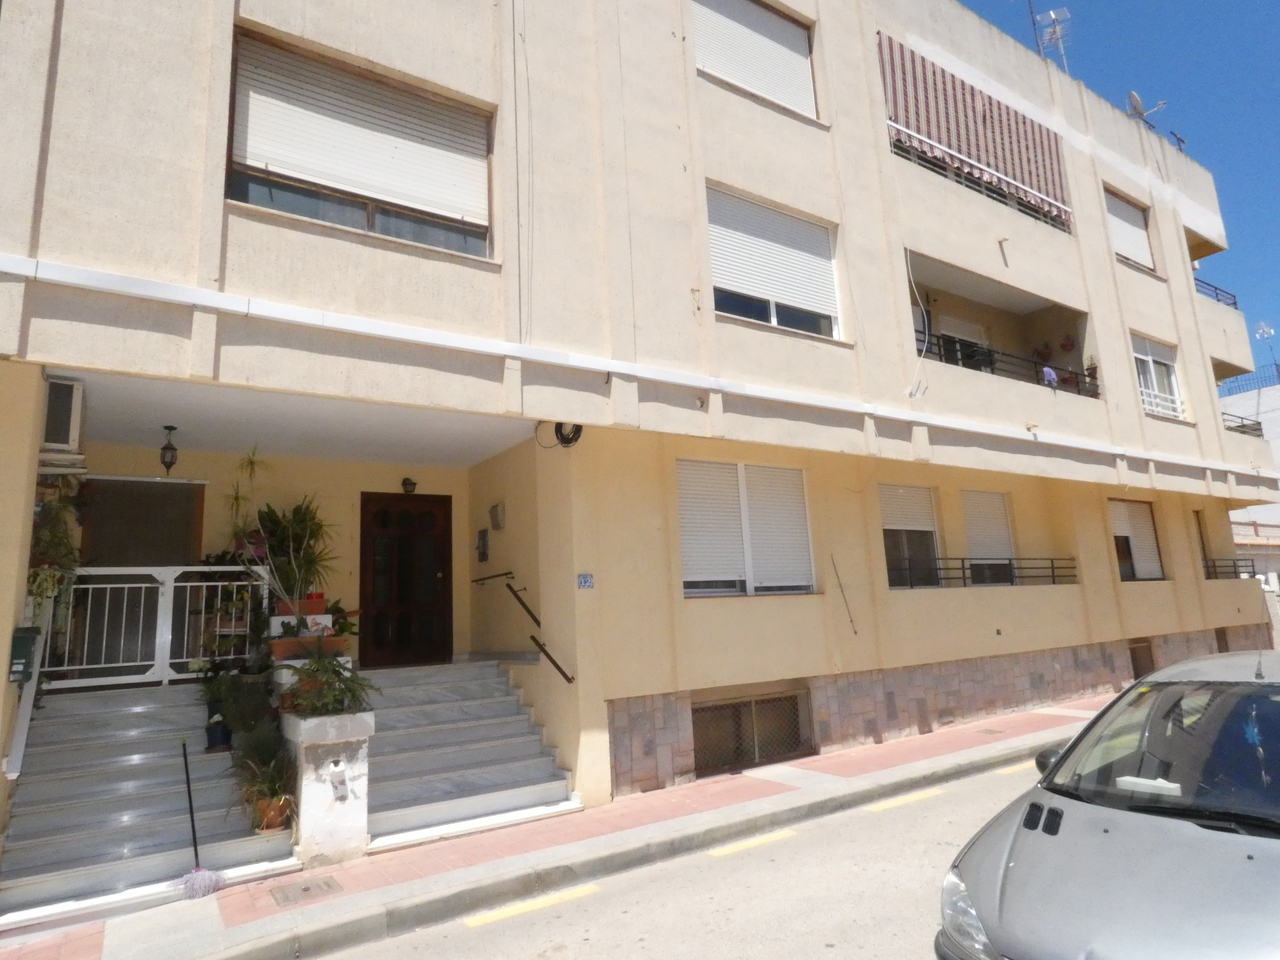 3 bedroom apartment / flat for sale in Algorfa, Costa Blanca